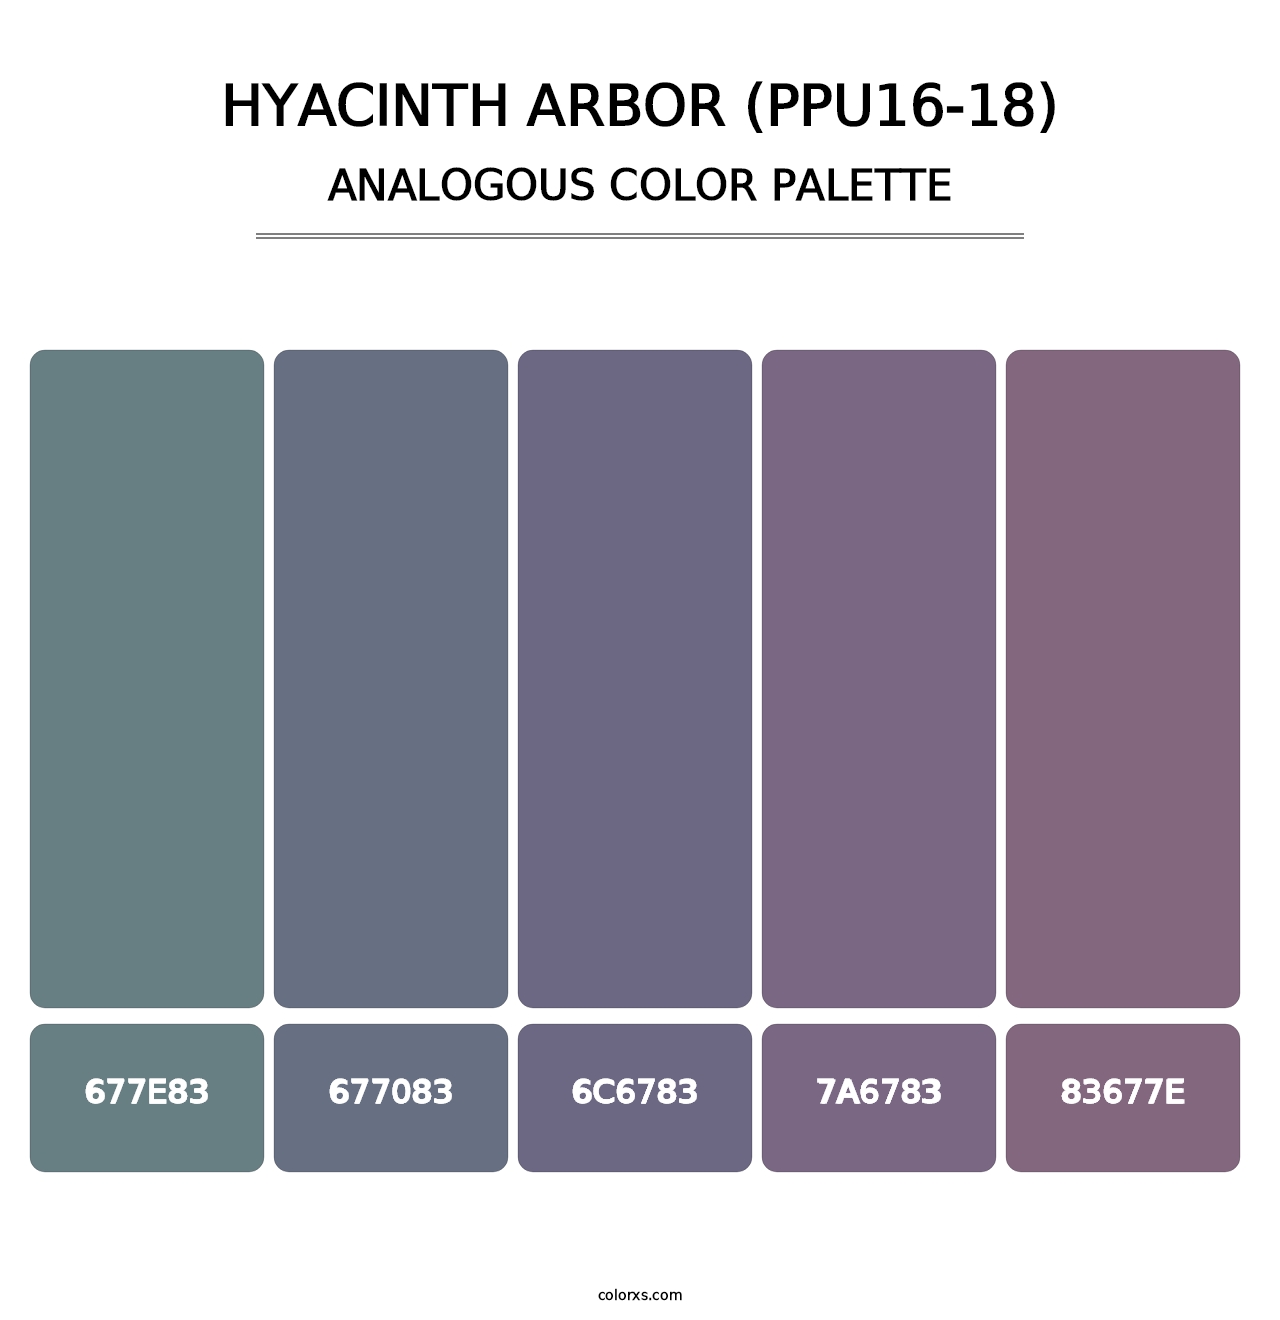 Hyacinth Arbor (PPU16-18) - Analogous Color Palette